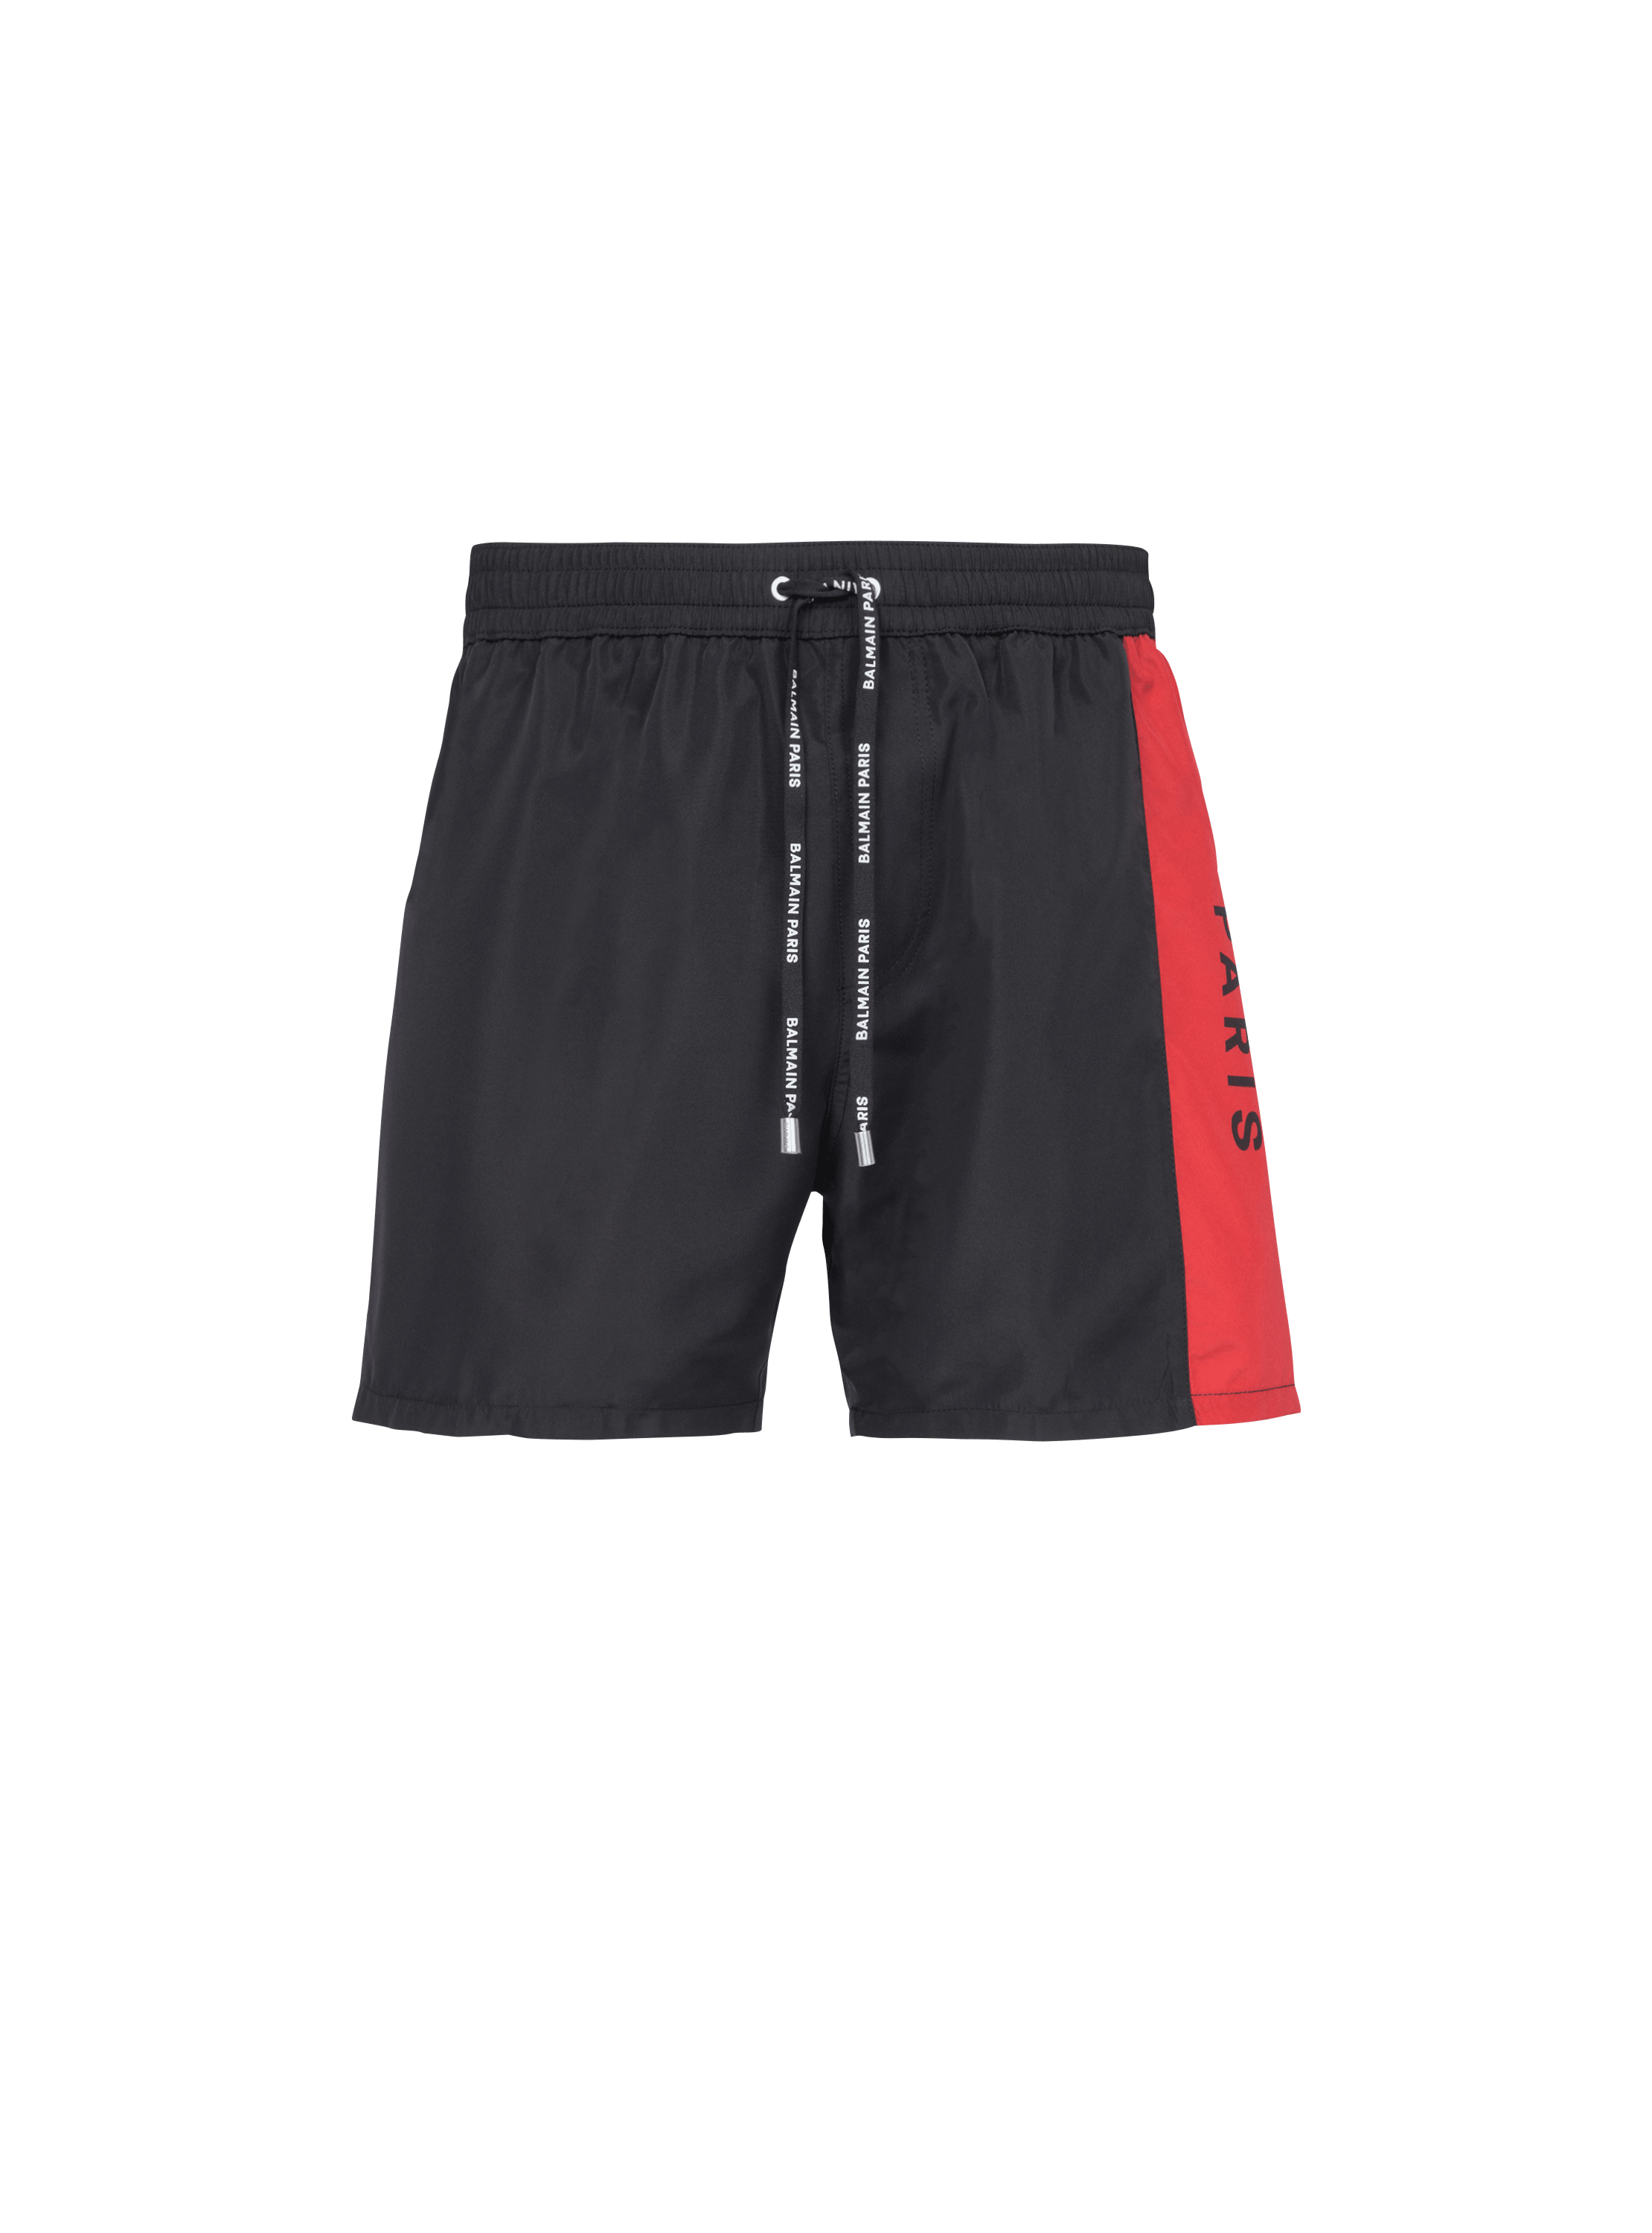 Balmain巴尔曼标志泳装短裤, black, hi-res